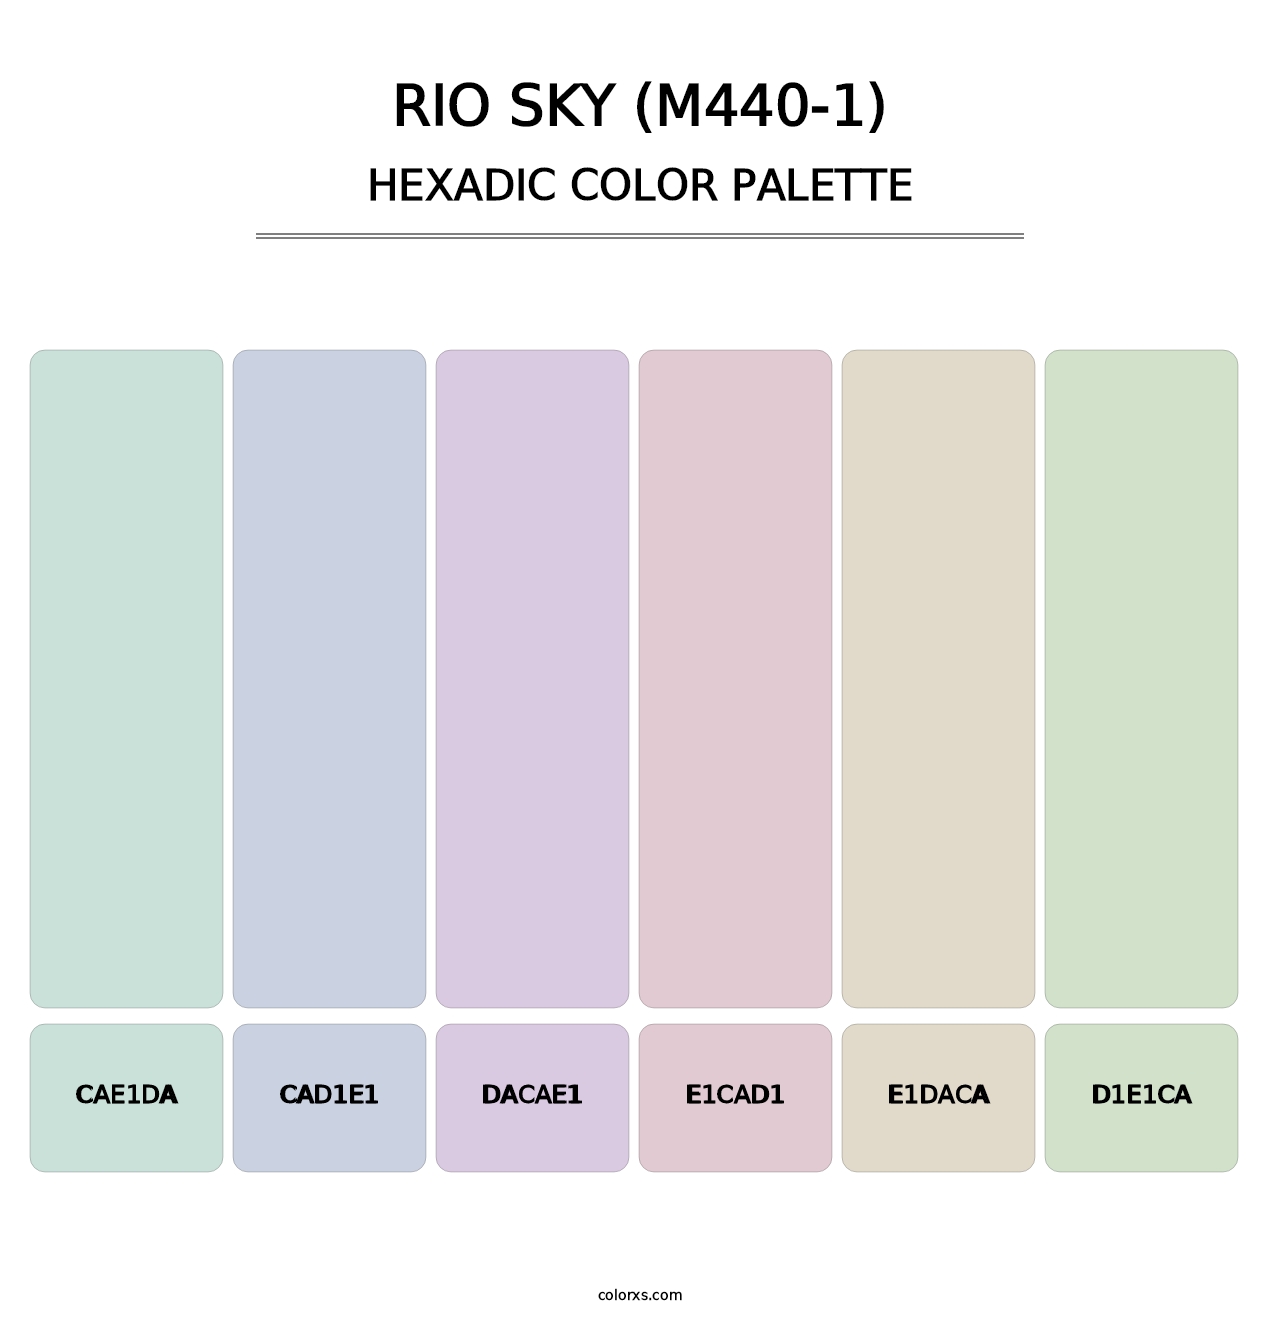 Rio Sky (M440-1) - Hexadic Color Palette